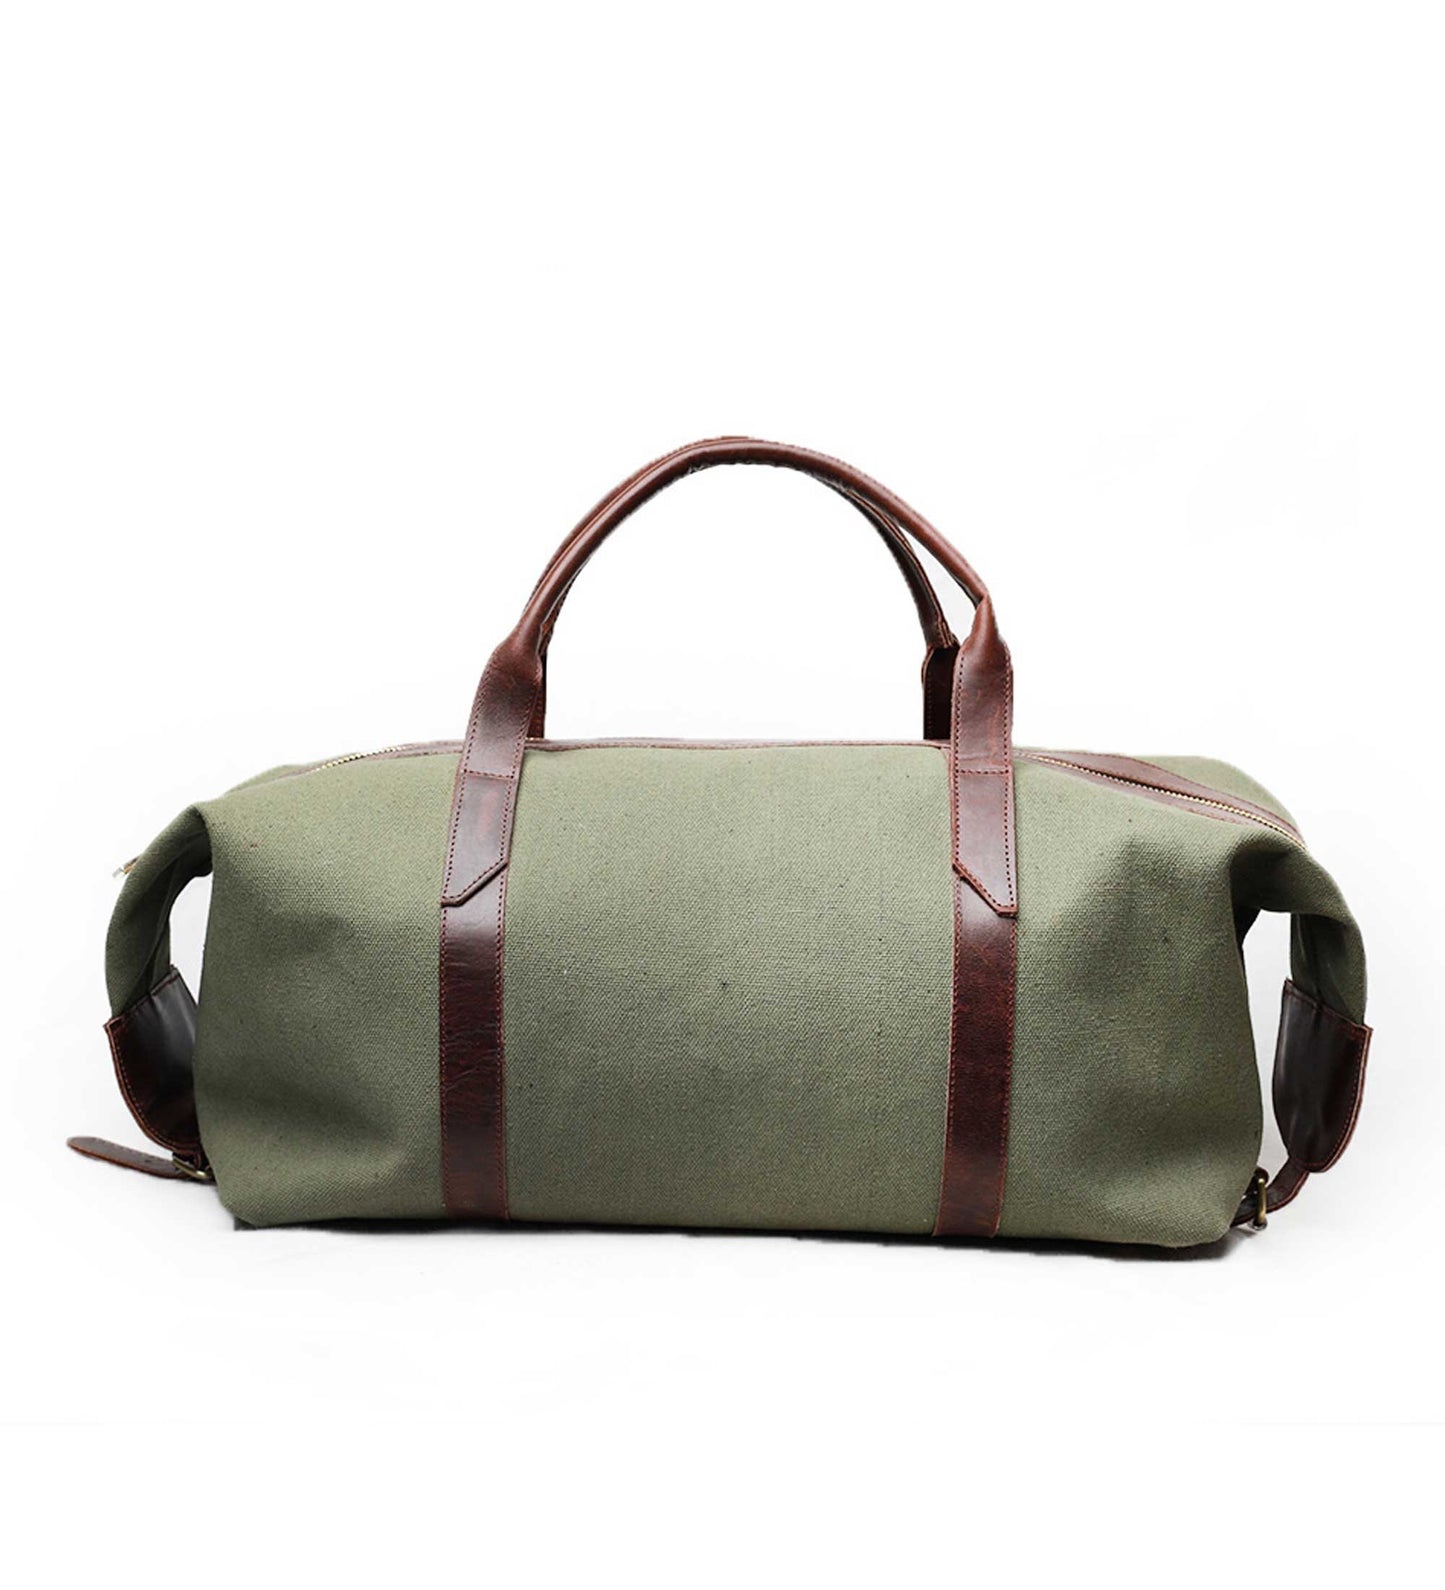 Ethiopian weekender canvas leathered travel bag